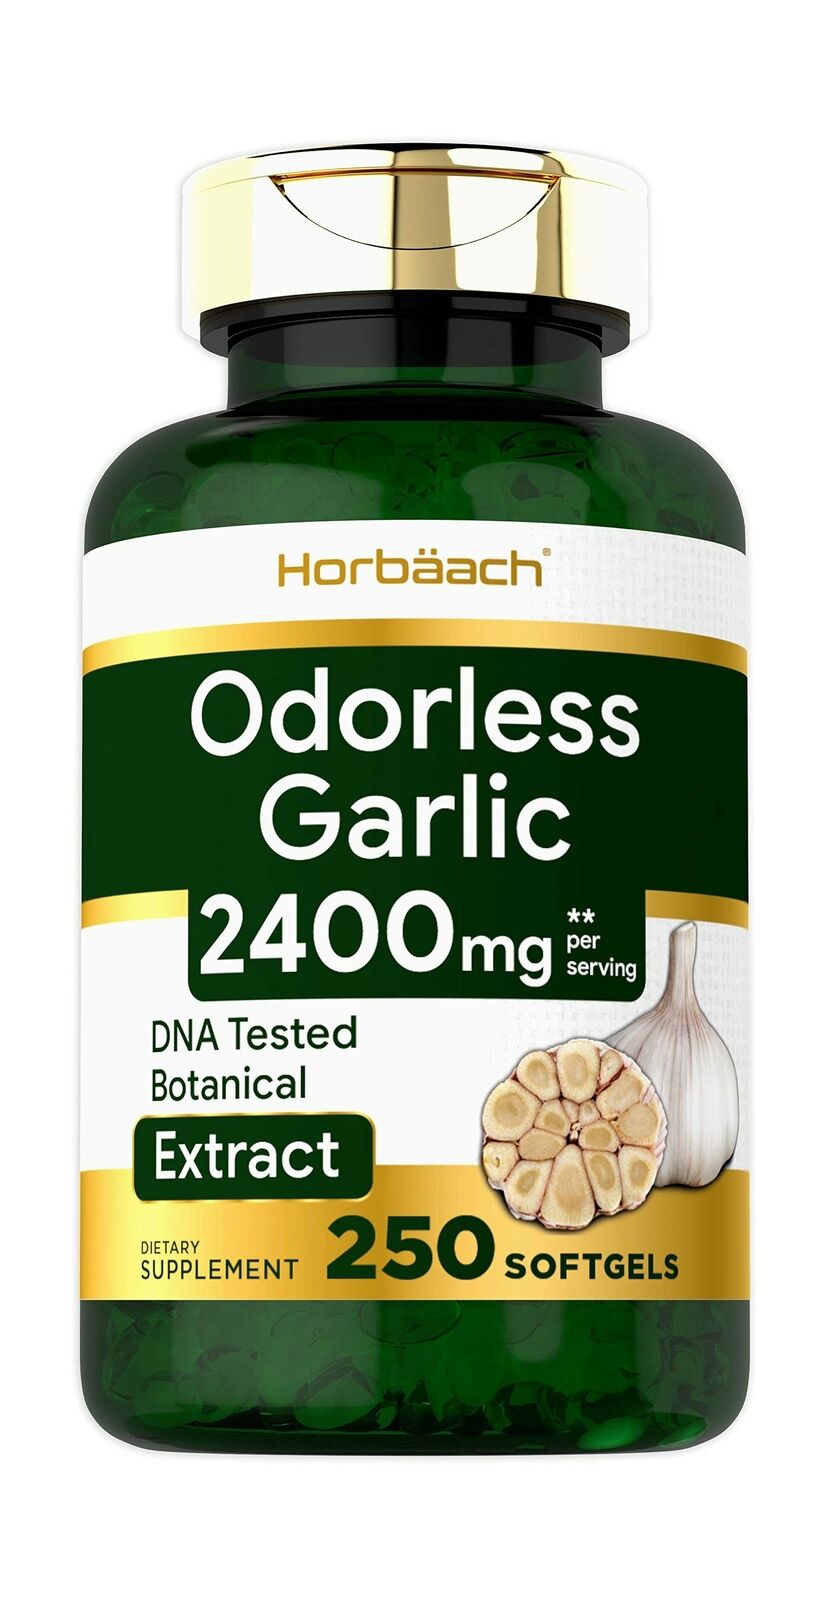 3600mg Odorless Garlic Softgels | Non-GMO, Gluten-Free